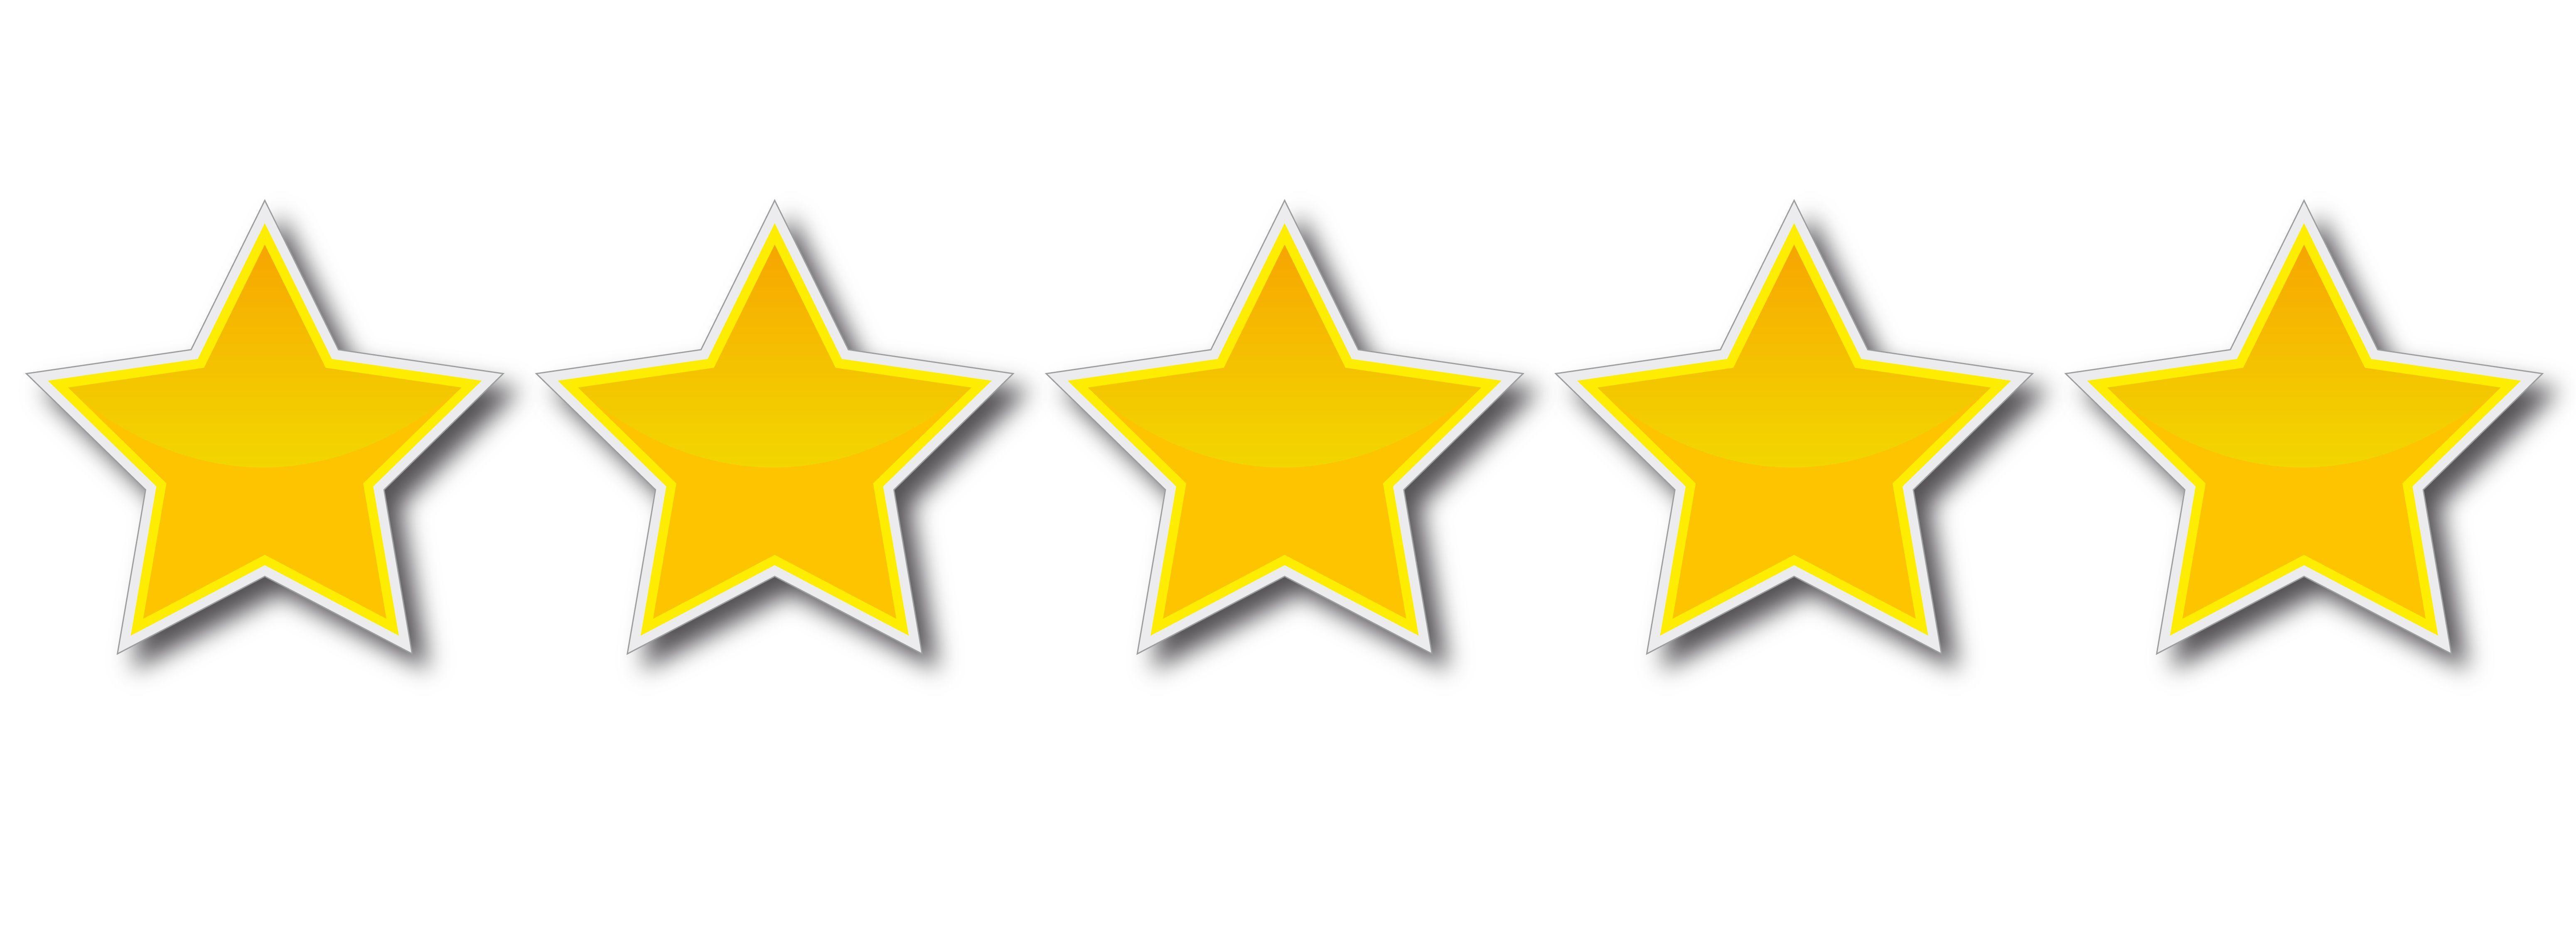 Amazon 5 Star Review Logo